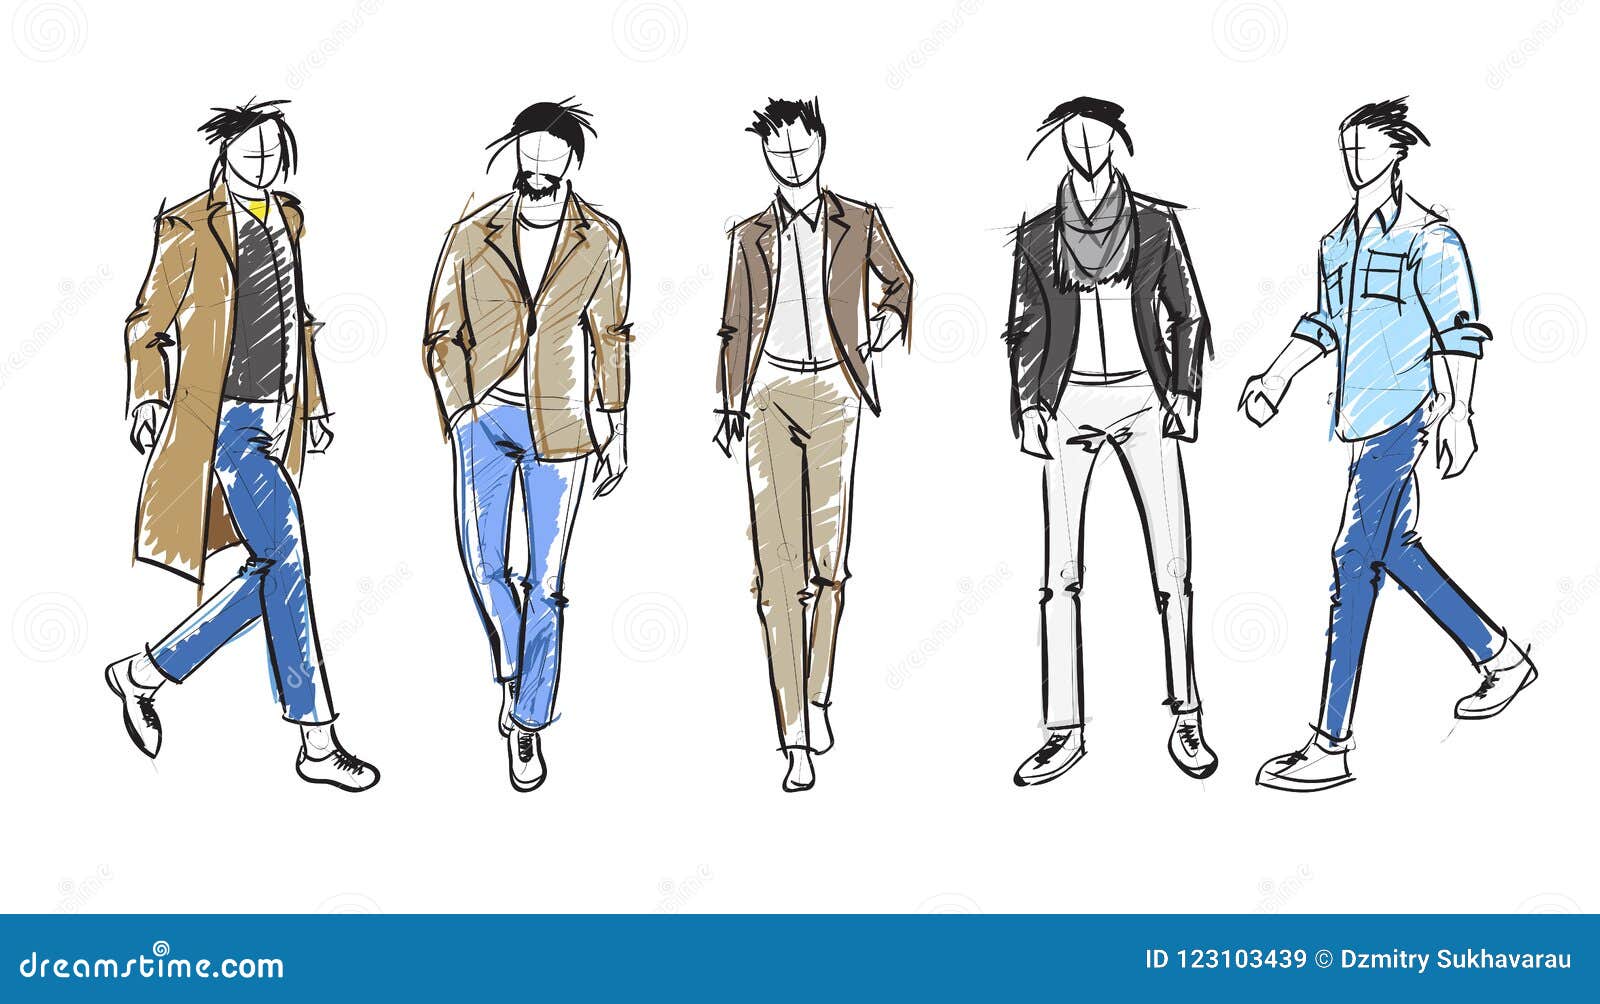 fashion man. set of fashionable men`s sketches